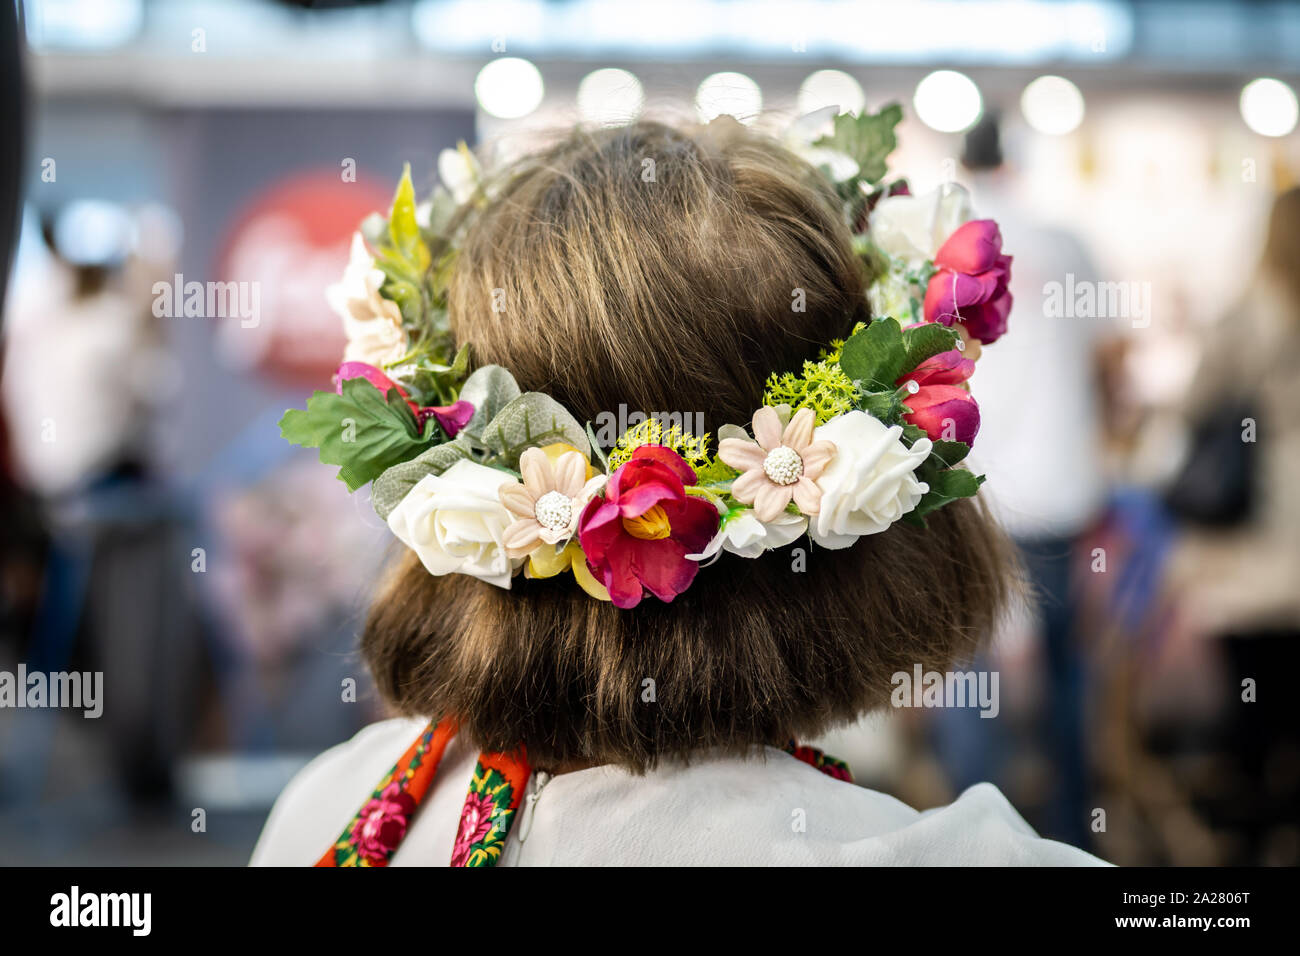 Polish woman in traditional polish folk dress wearing a flower crown. Stock Photo